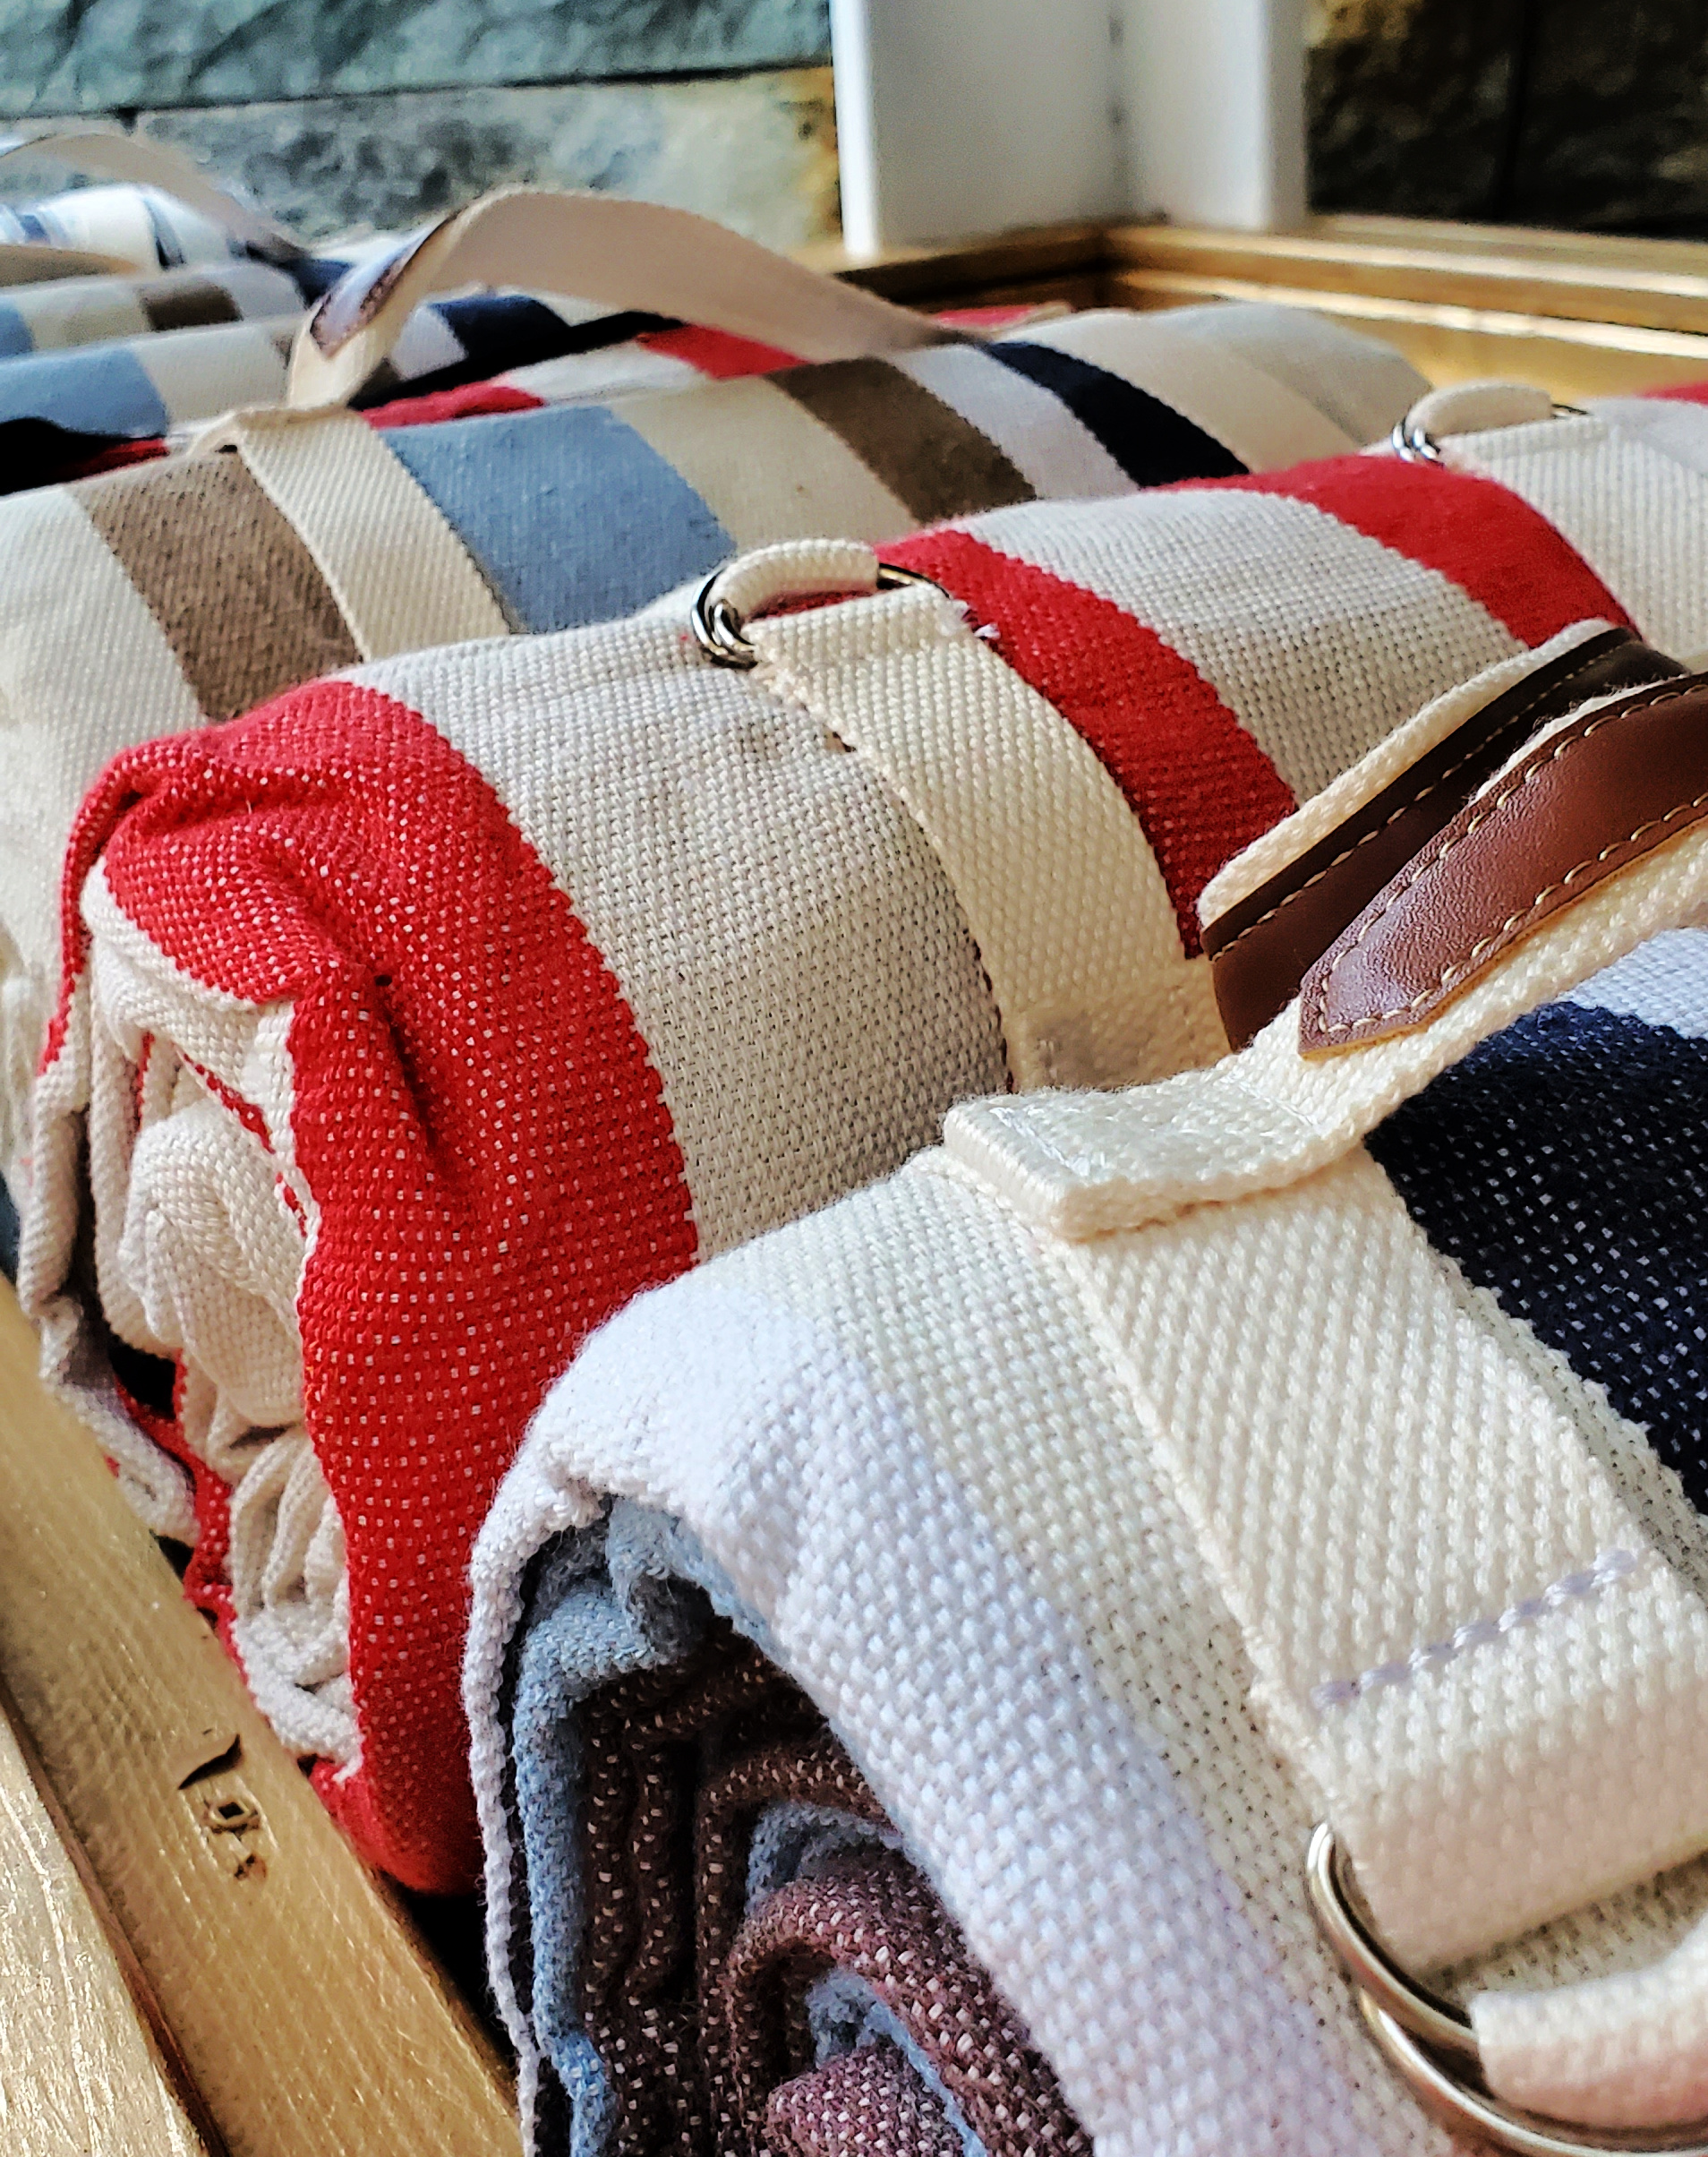 Blanket rolls on a tray